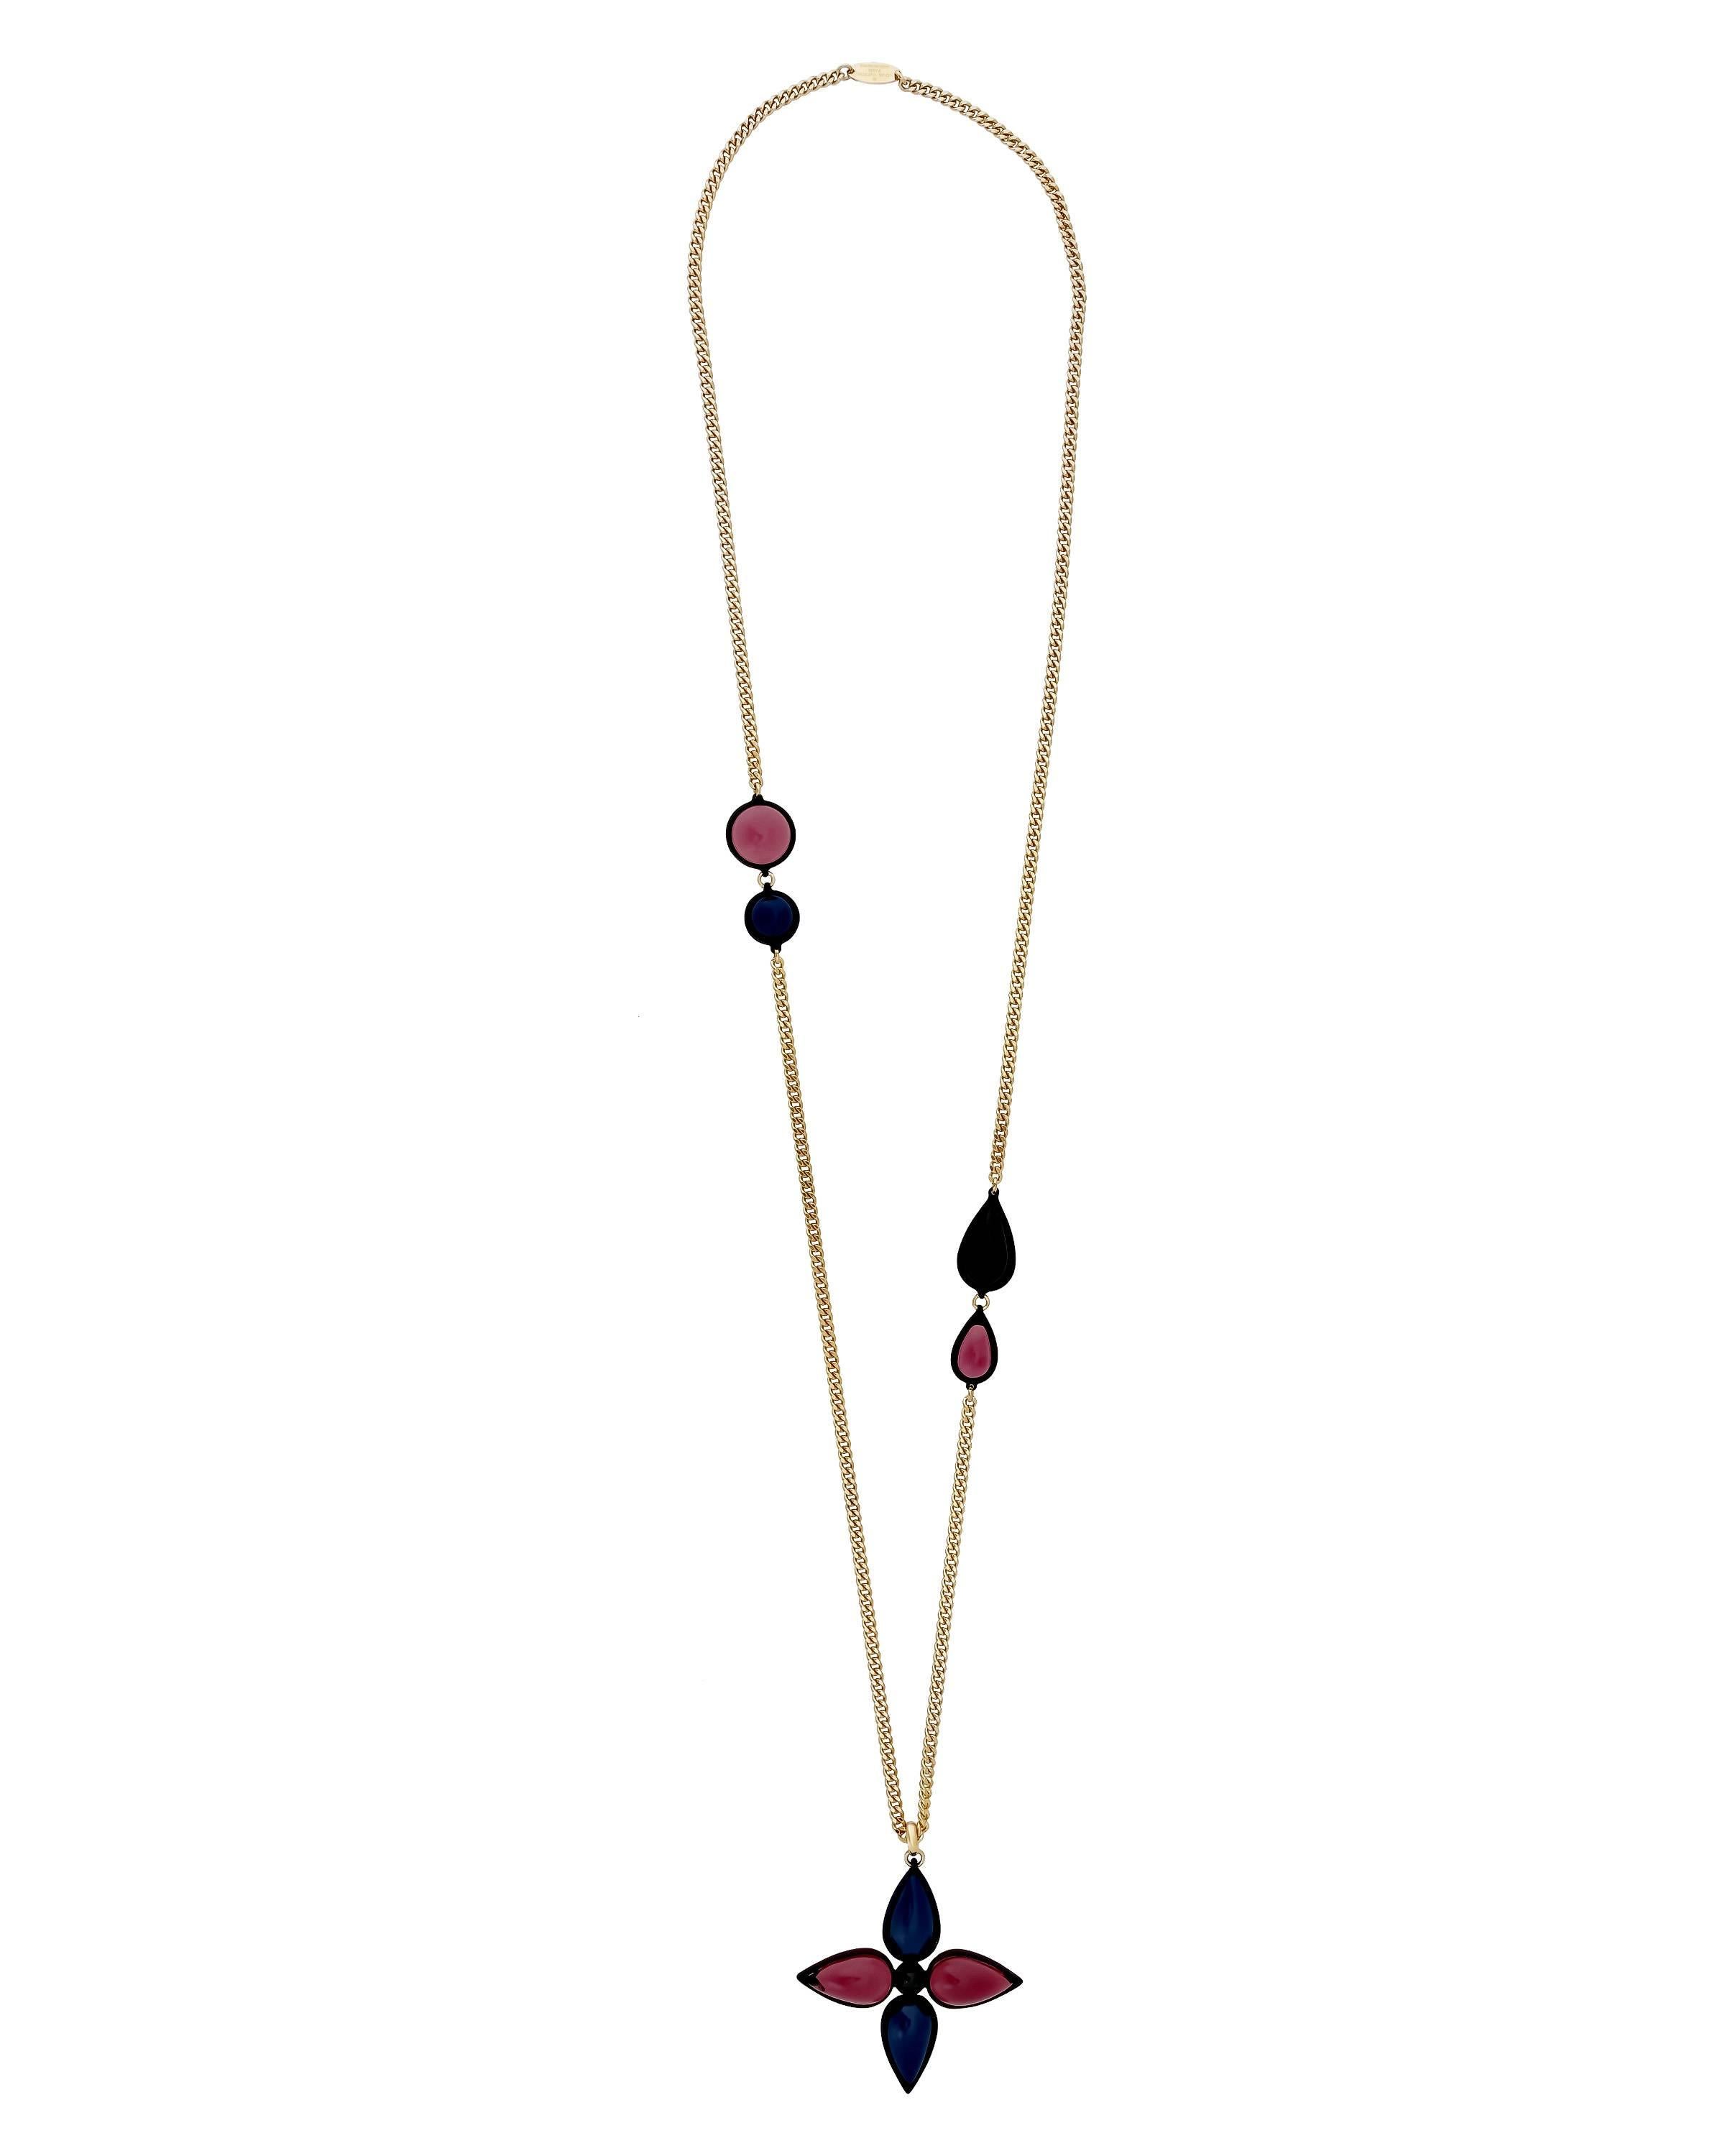 Louis Vuitton Gold Tone Tourmaline with Black & Blue Enamel Monogram Necklace. Length is 34 inches long.